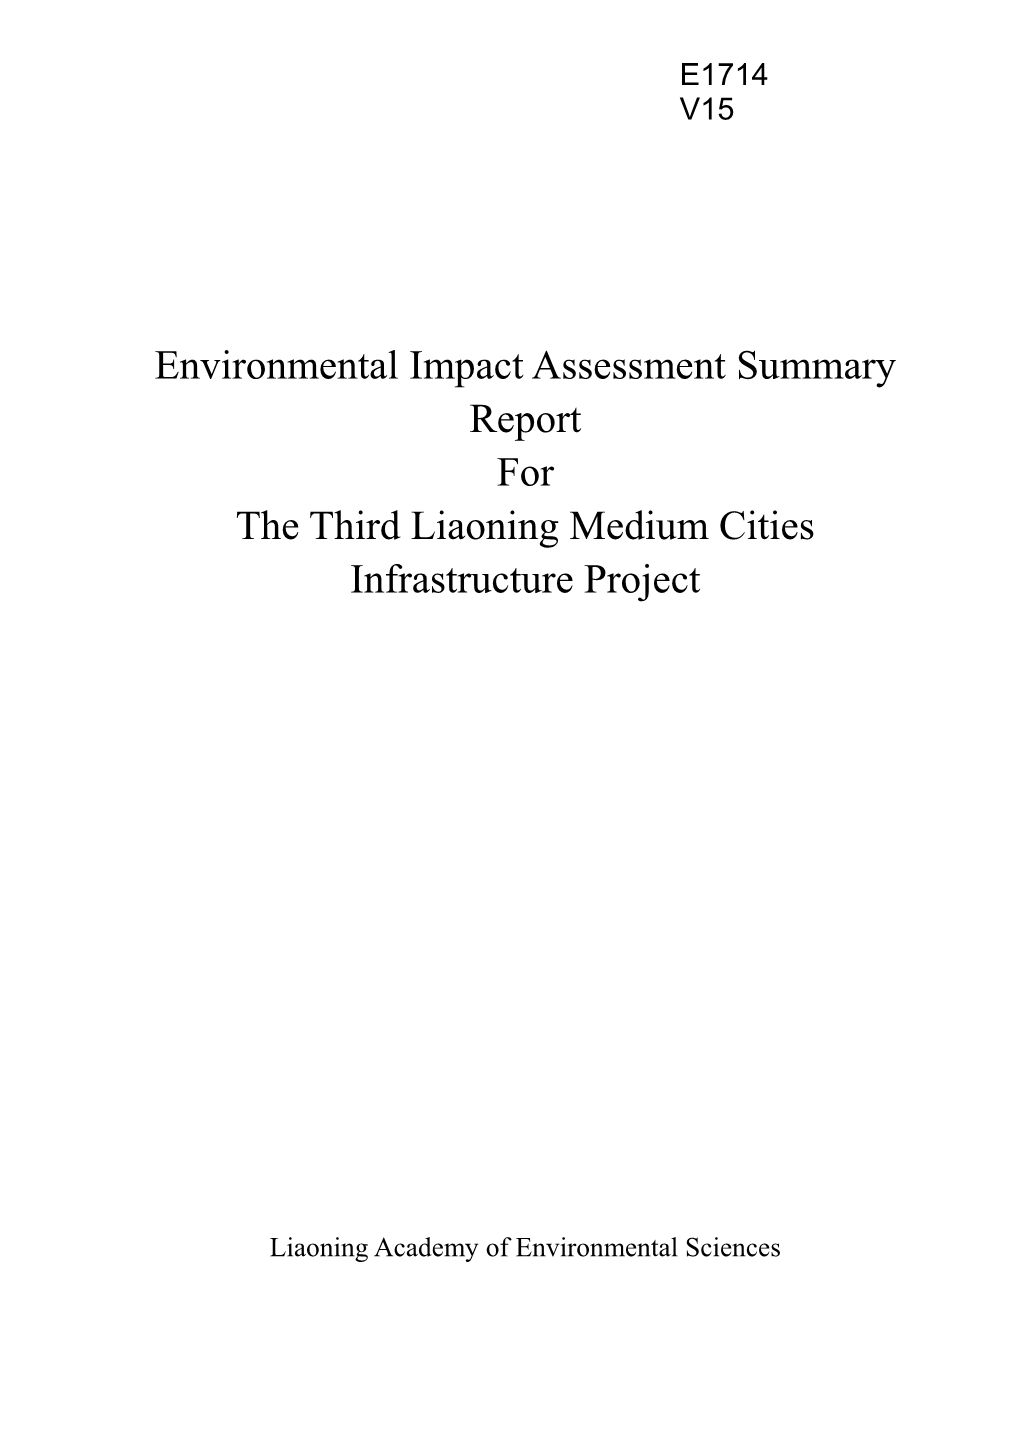 Environmental Impact Assessment Summary Report